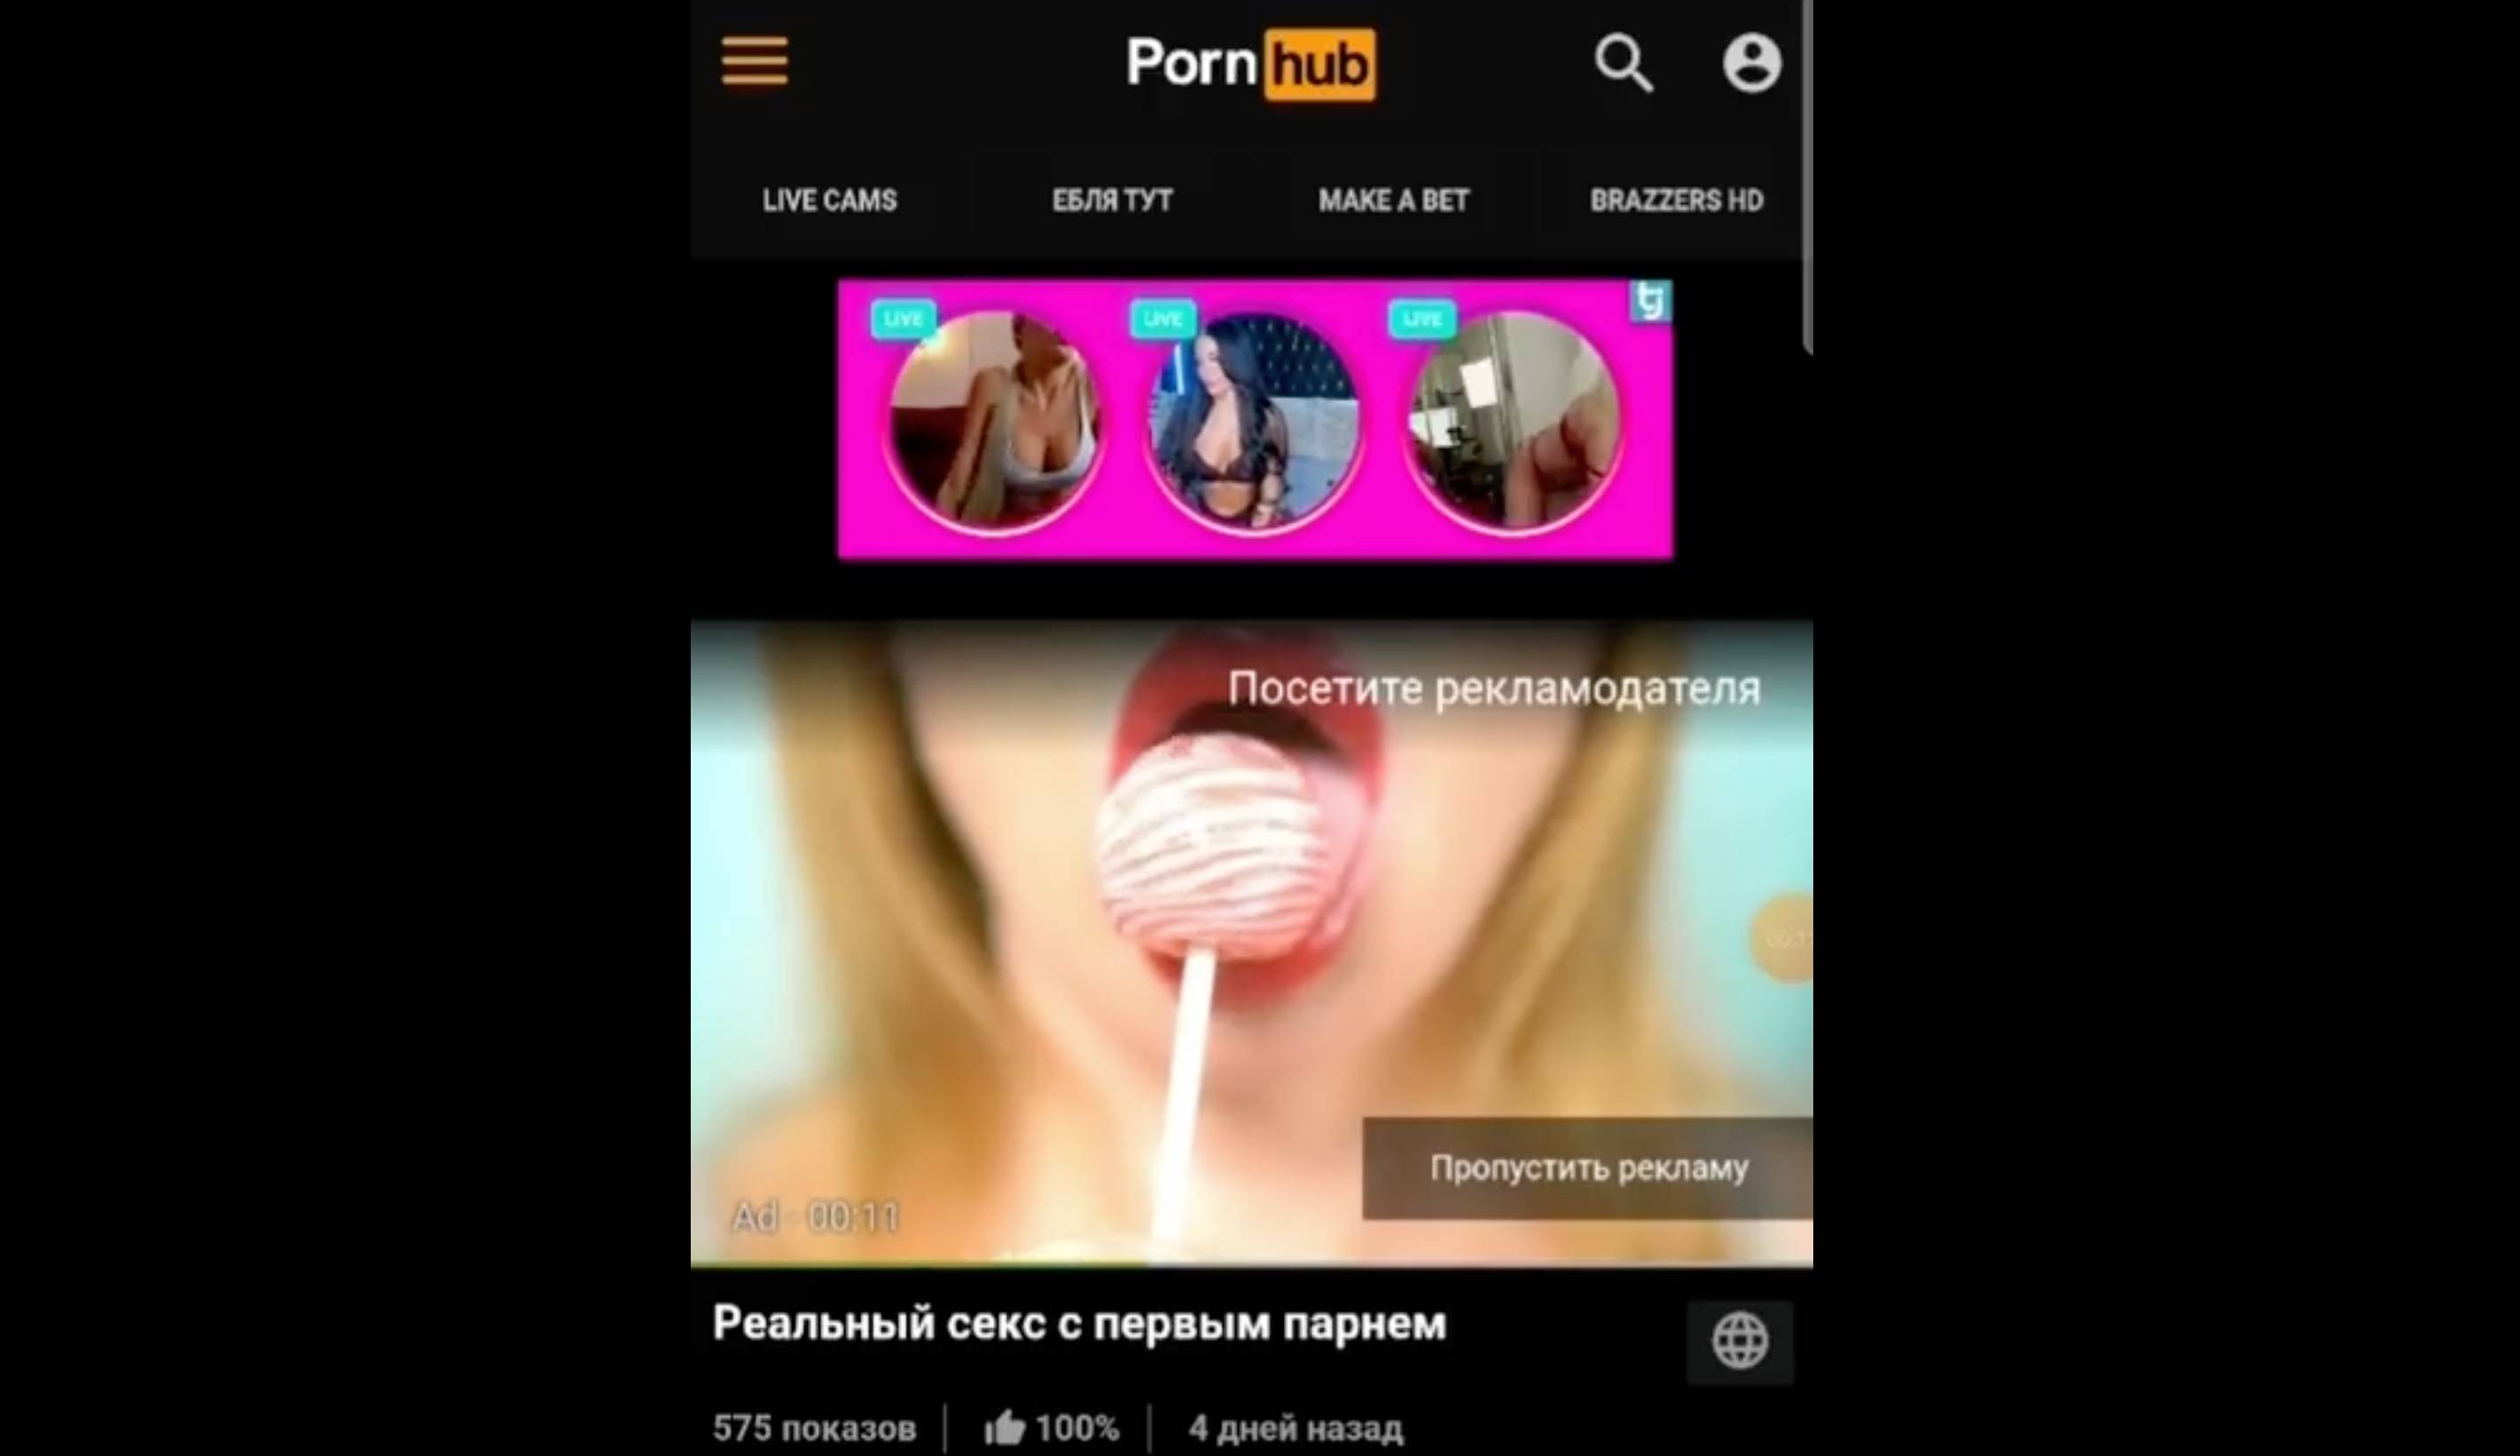 Pornhub Ad Porn - Notorious Russian Mercenaries Wagner Are Advertising on Pornhub